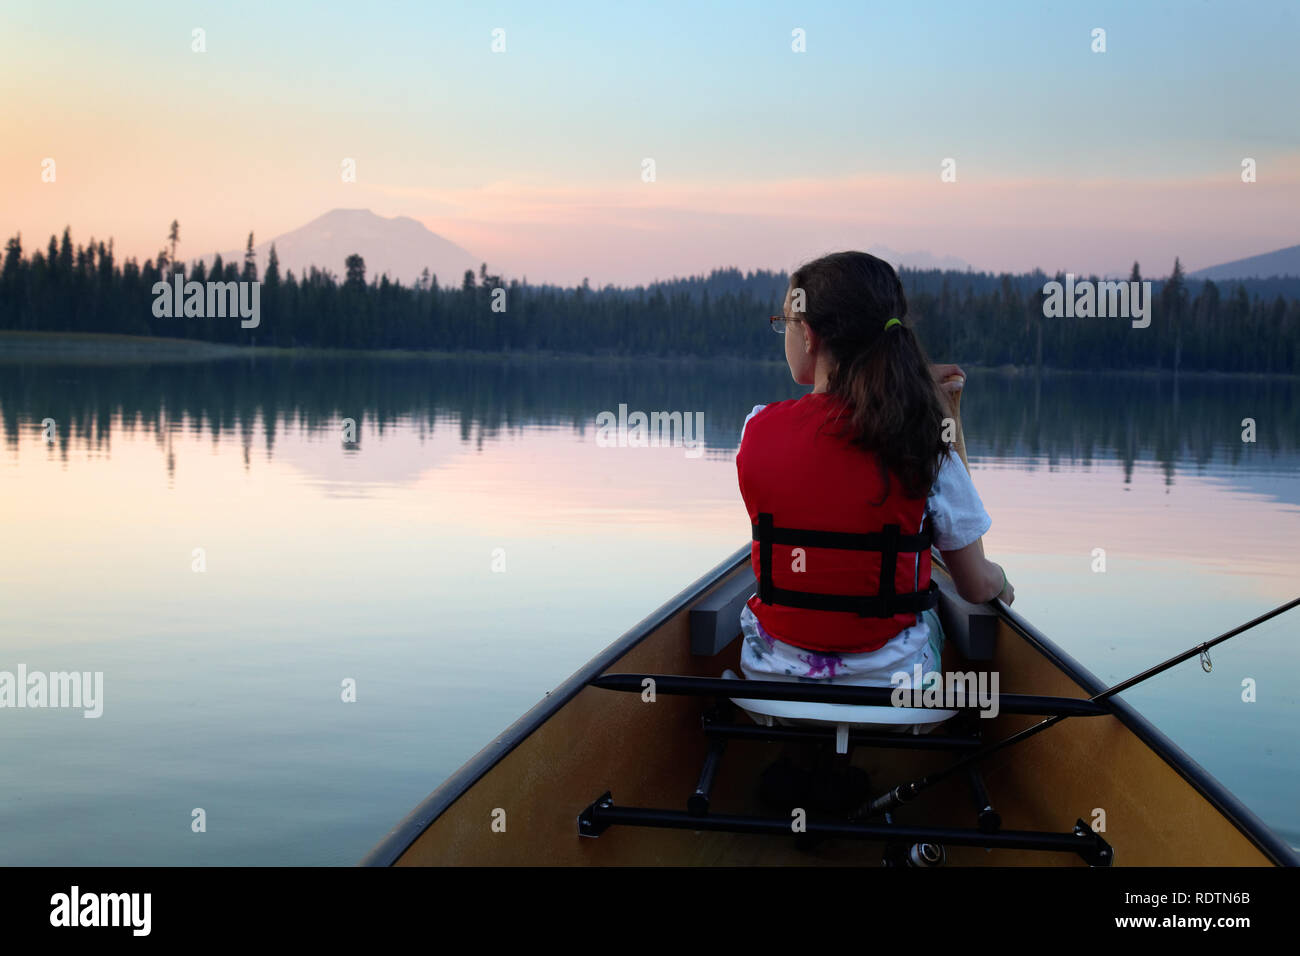 Girl paddling canoe on Hosmer Lake at dusk, Mountain Bachelor in background, Cascade Lakes, Oregon, USA Stock Photo